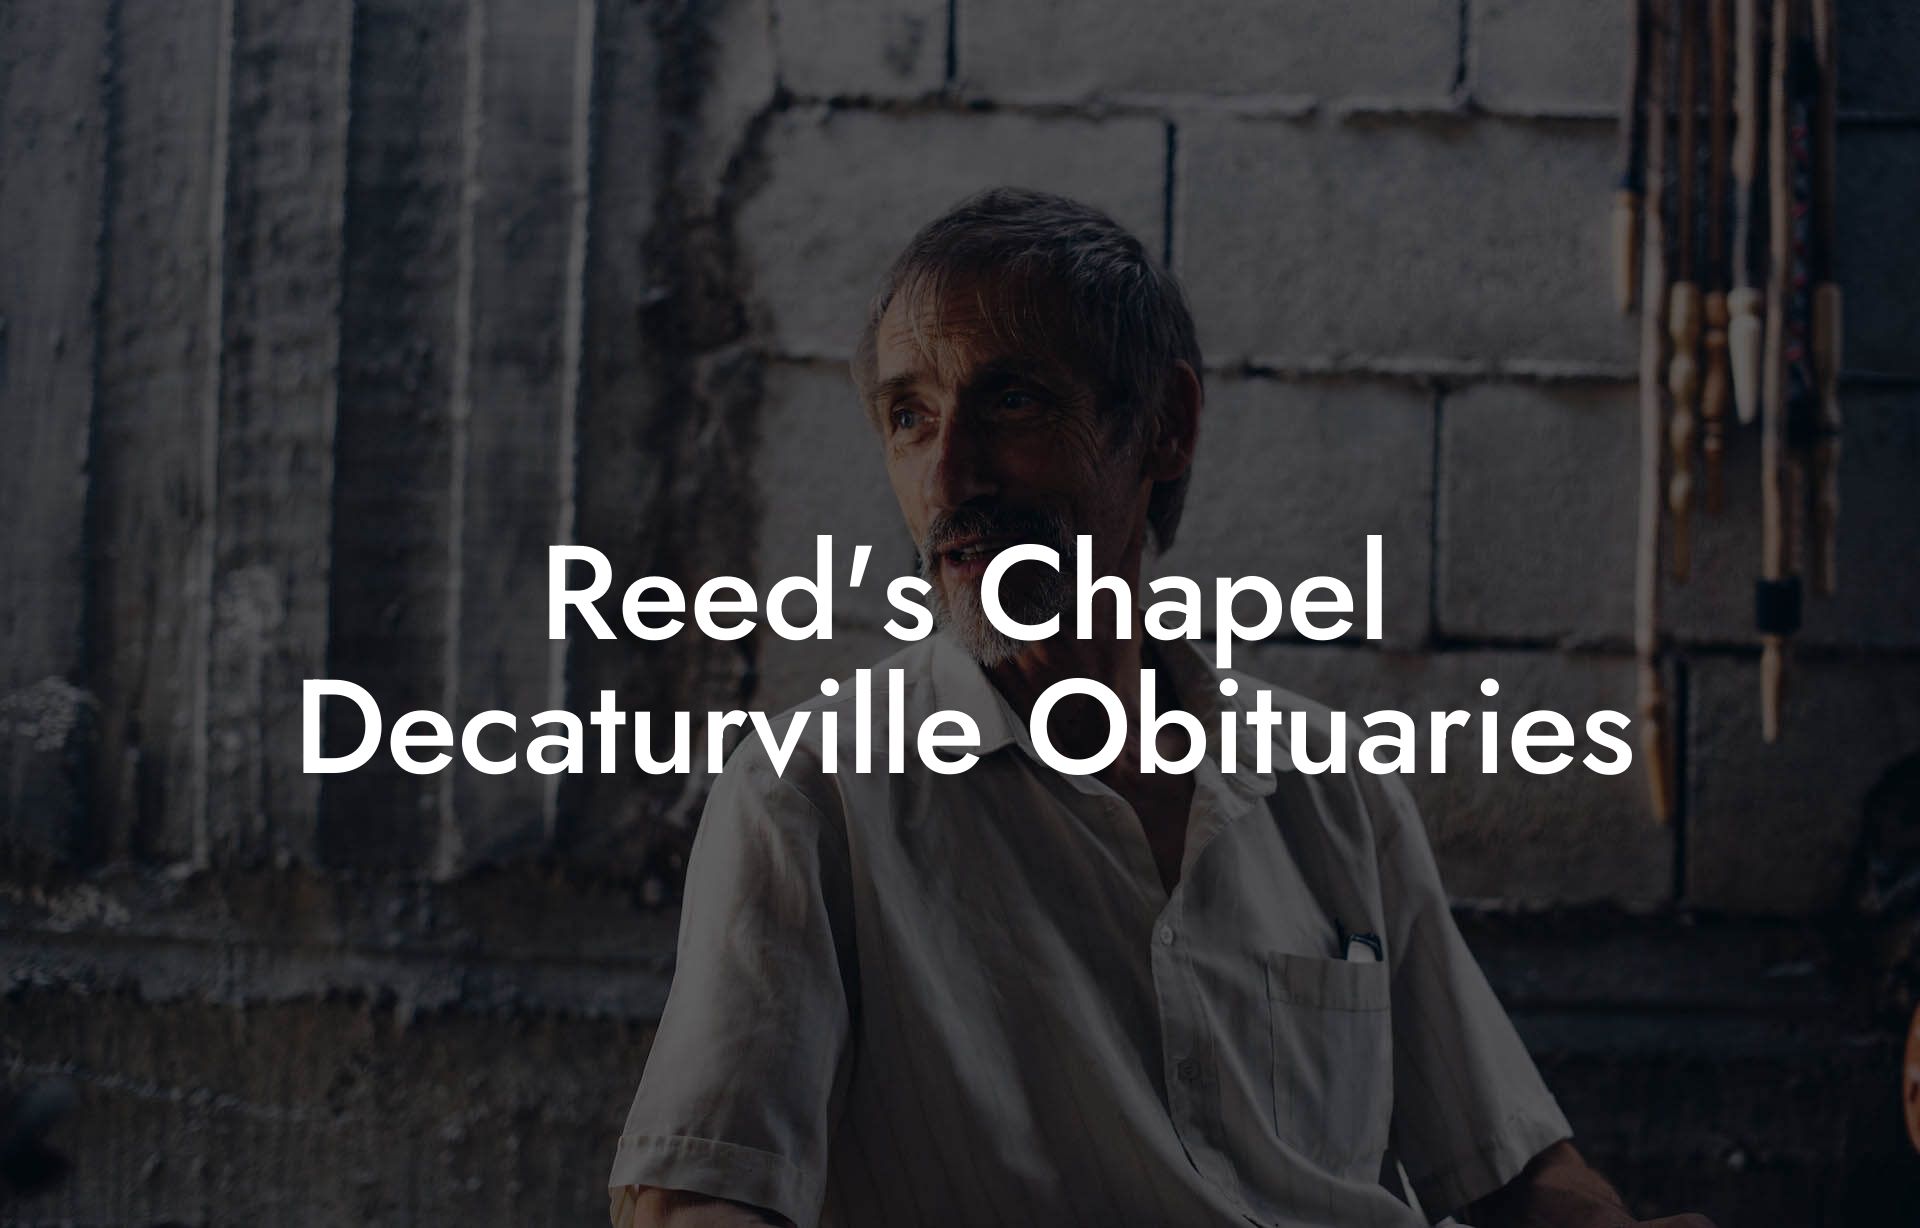 Reed's Chapel Decaturville Obituaries